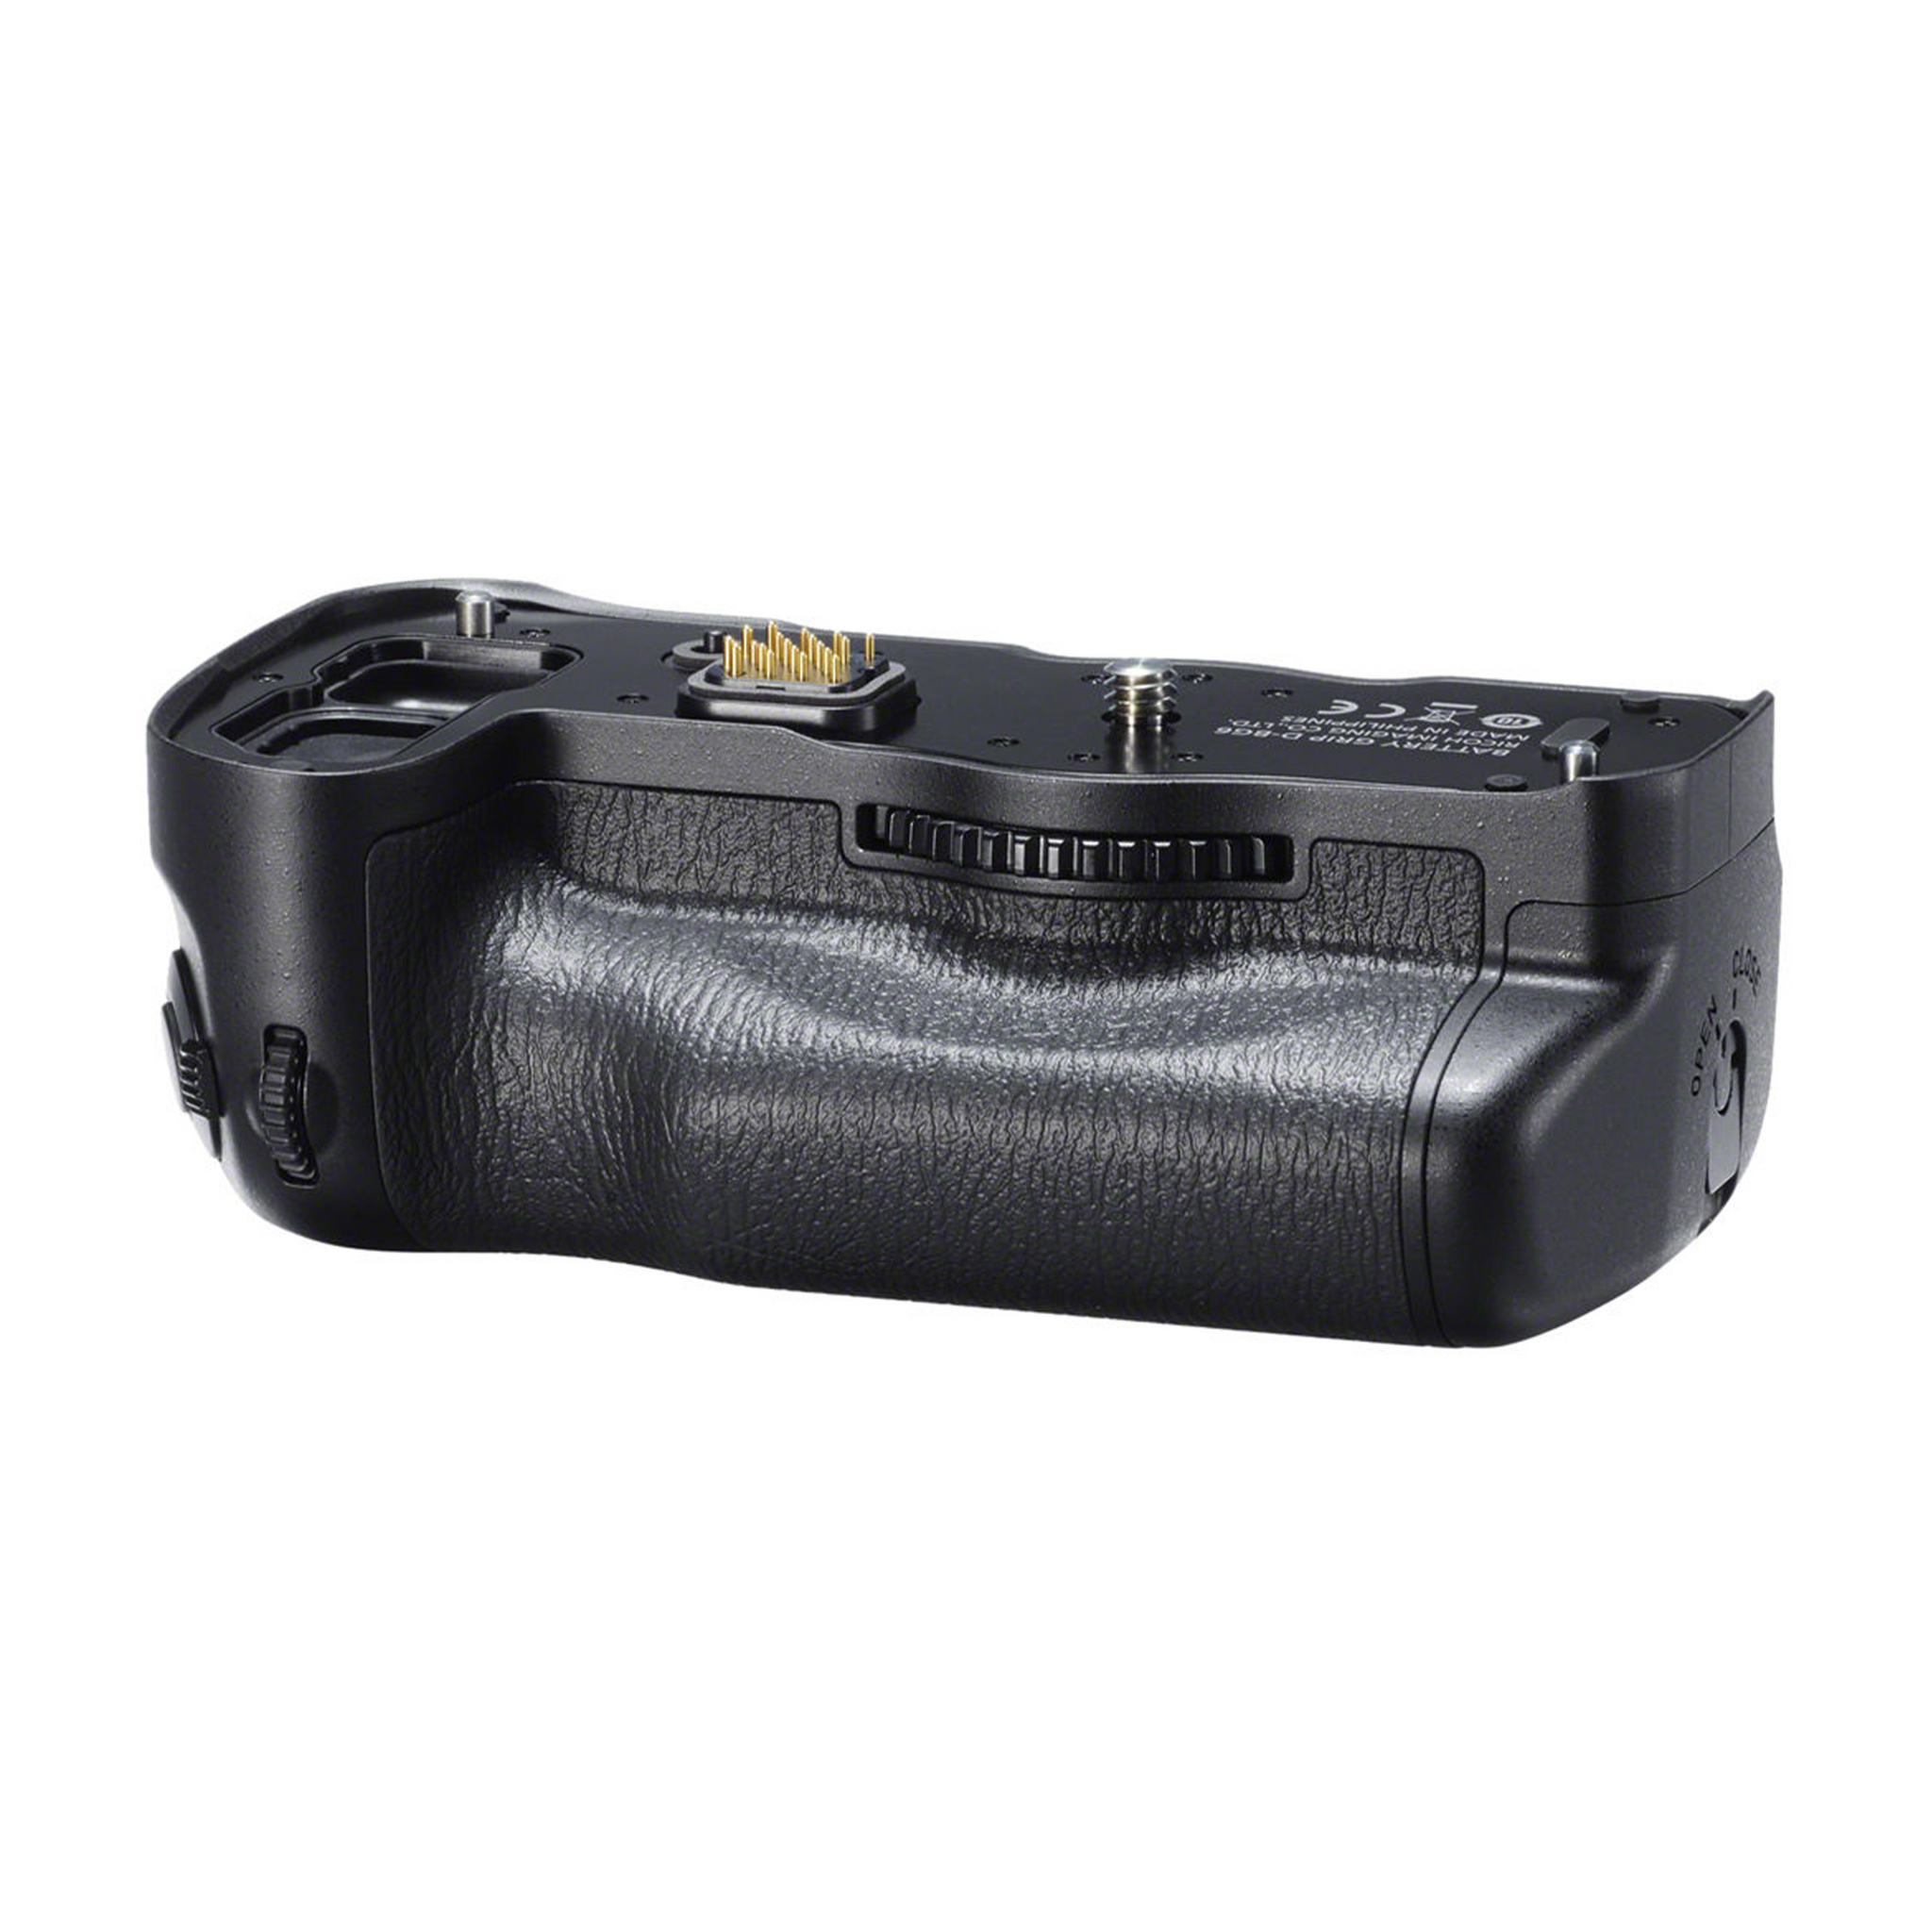 PENTAX D-BG6 Battery Grip-Camera Accessories-futuromic